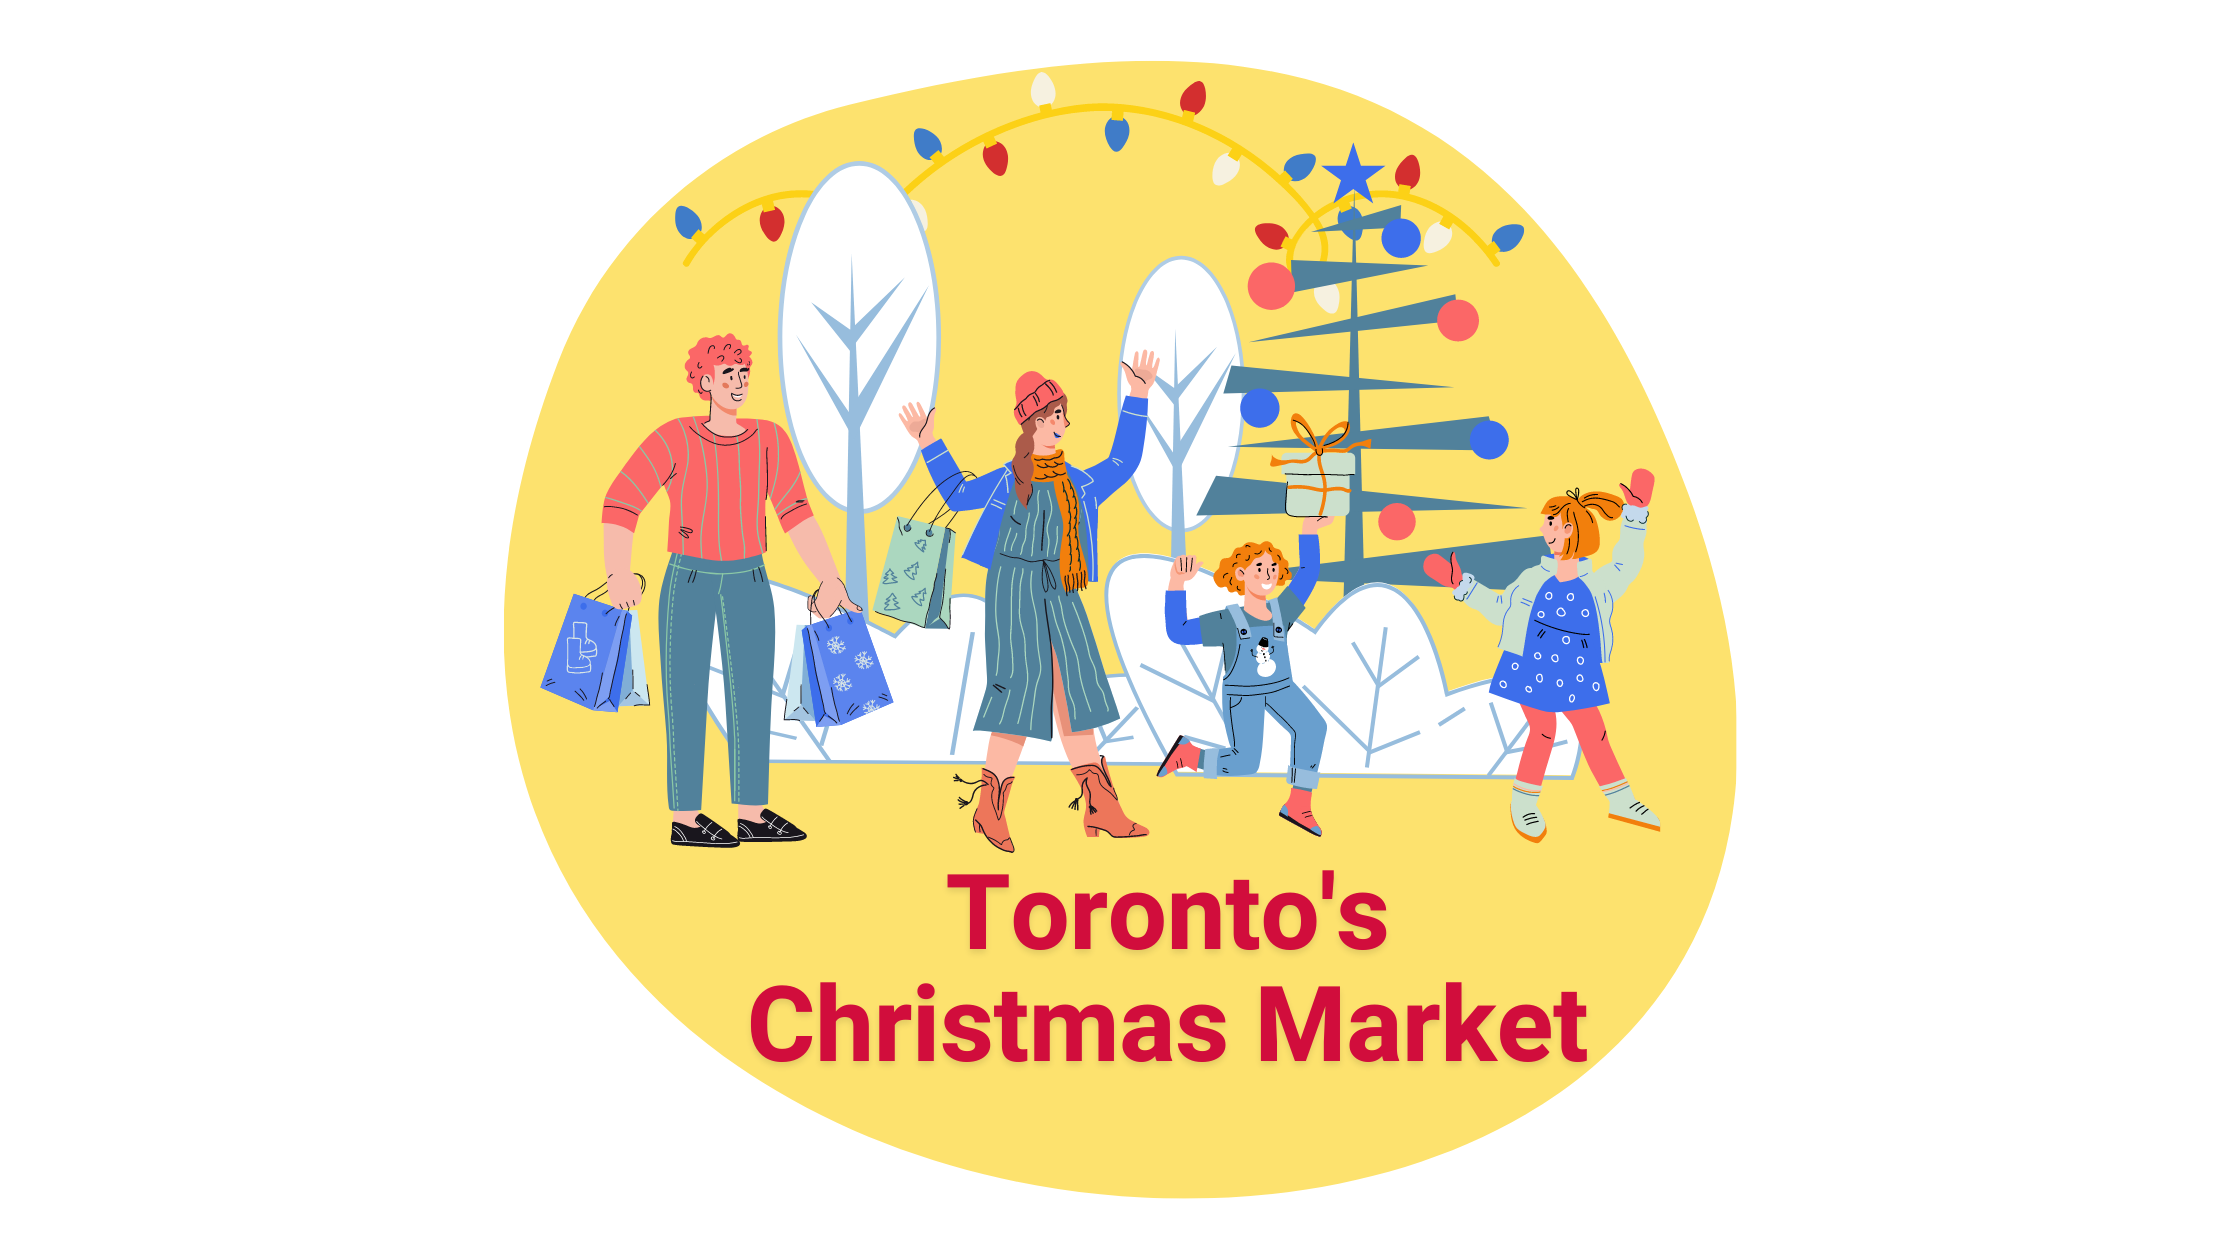 Toronto's Christas Market infomation for  2021